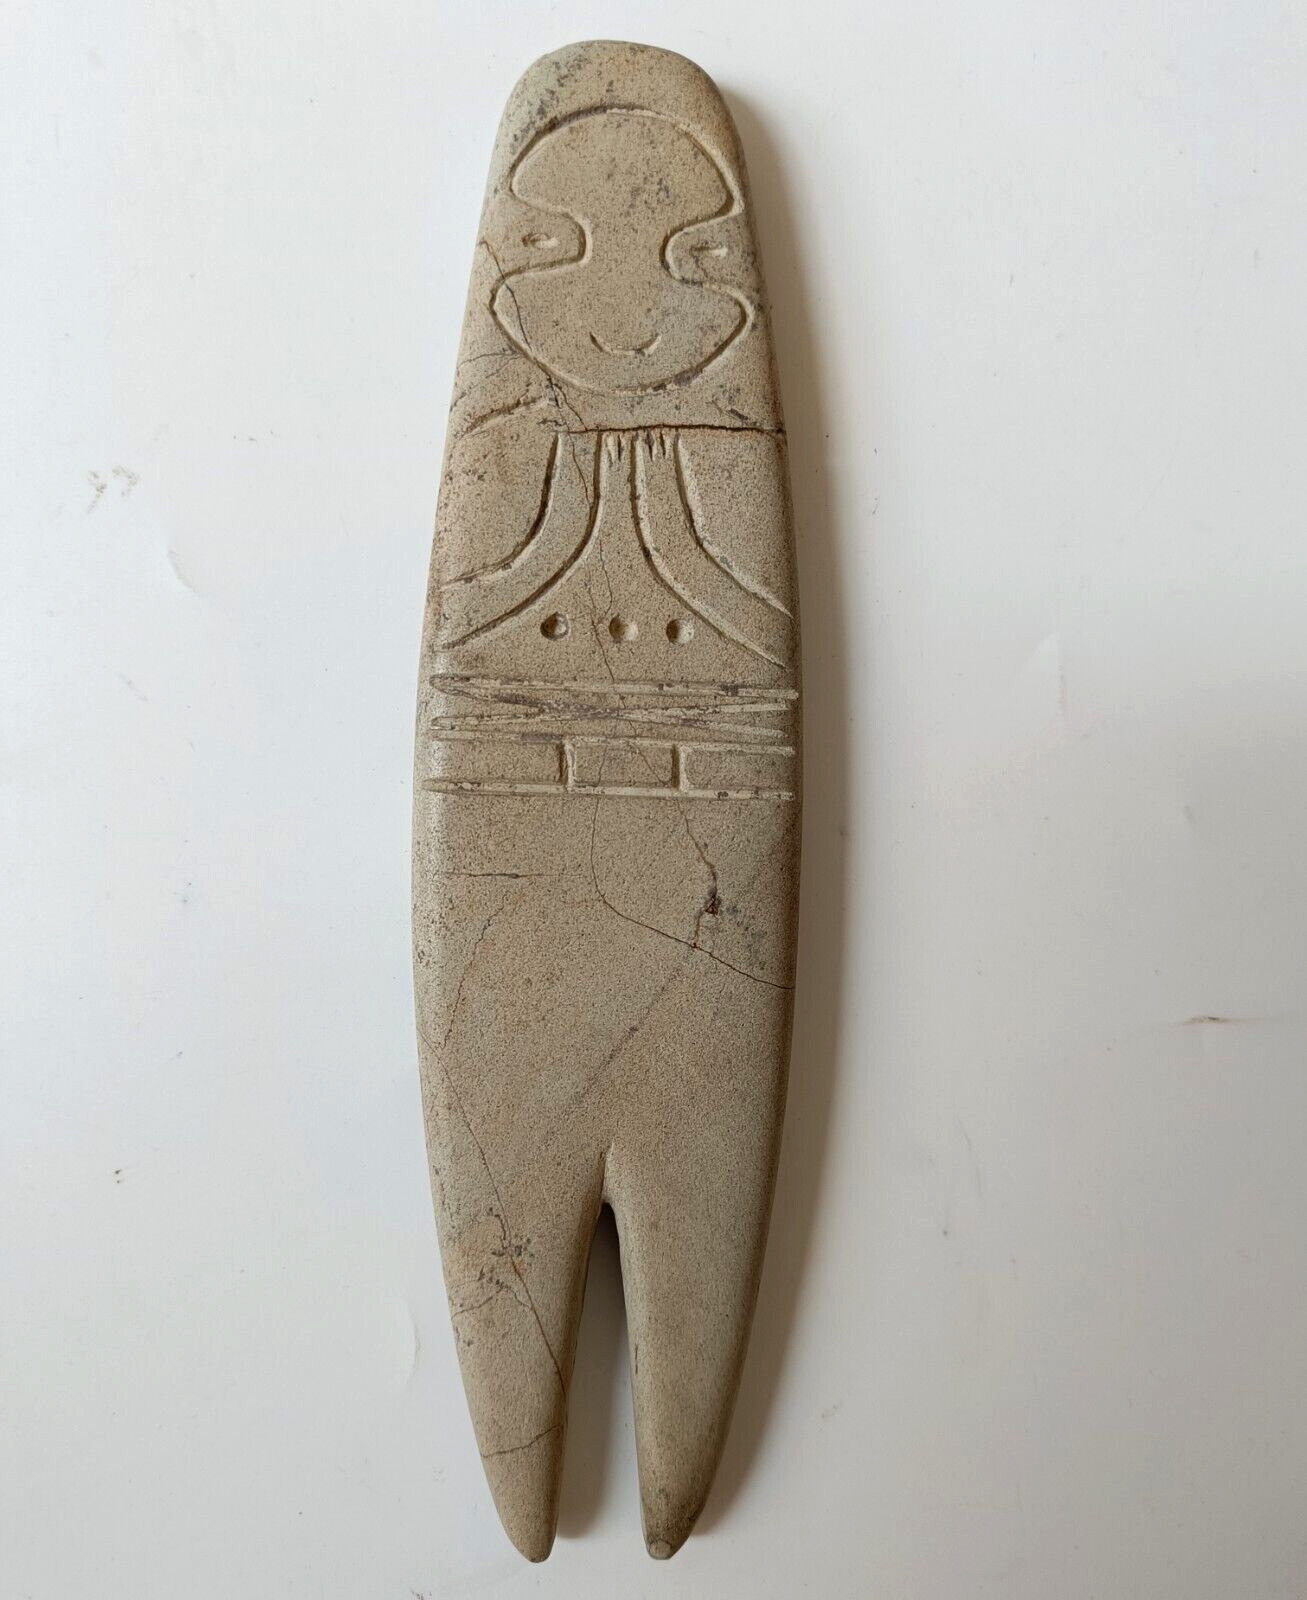 South American stone Stella type figure Amazonian or Pre Columbian